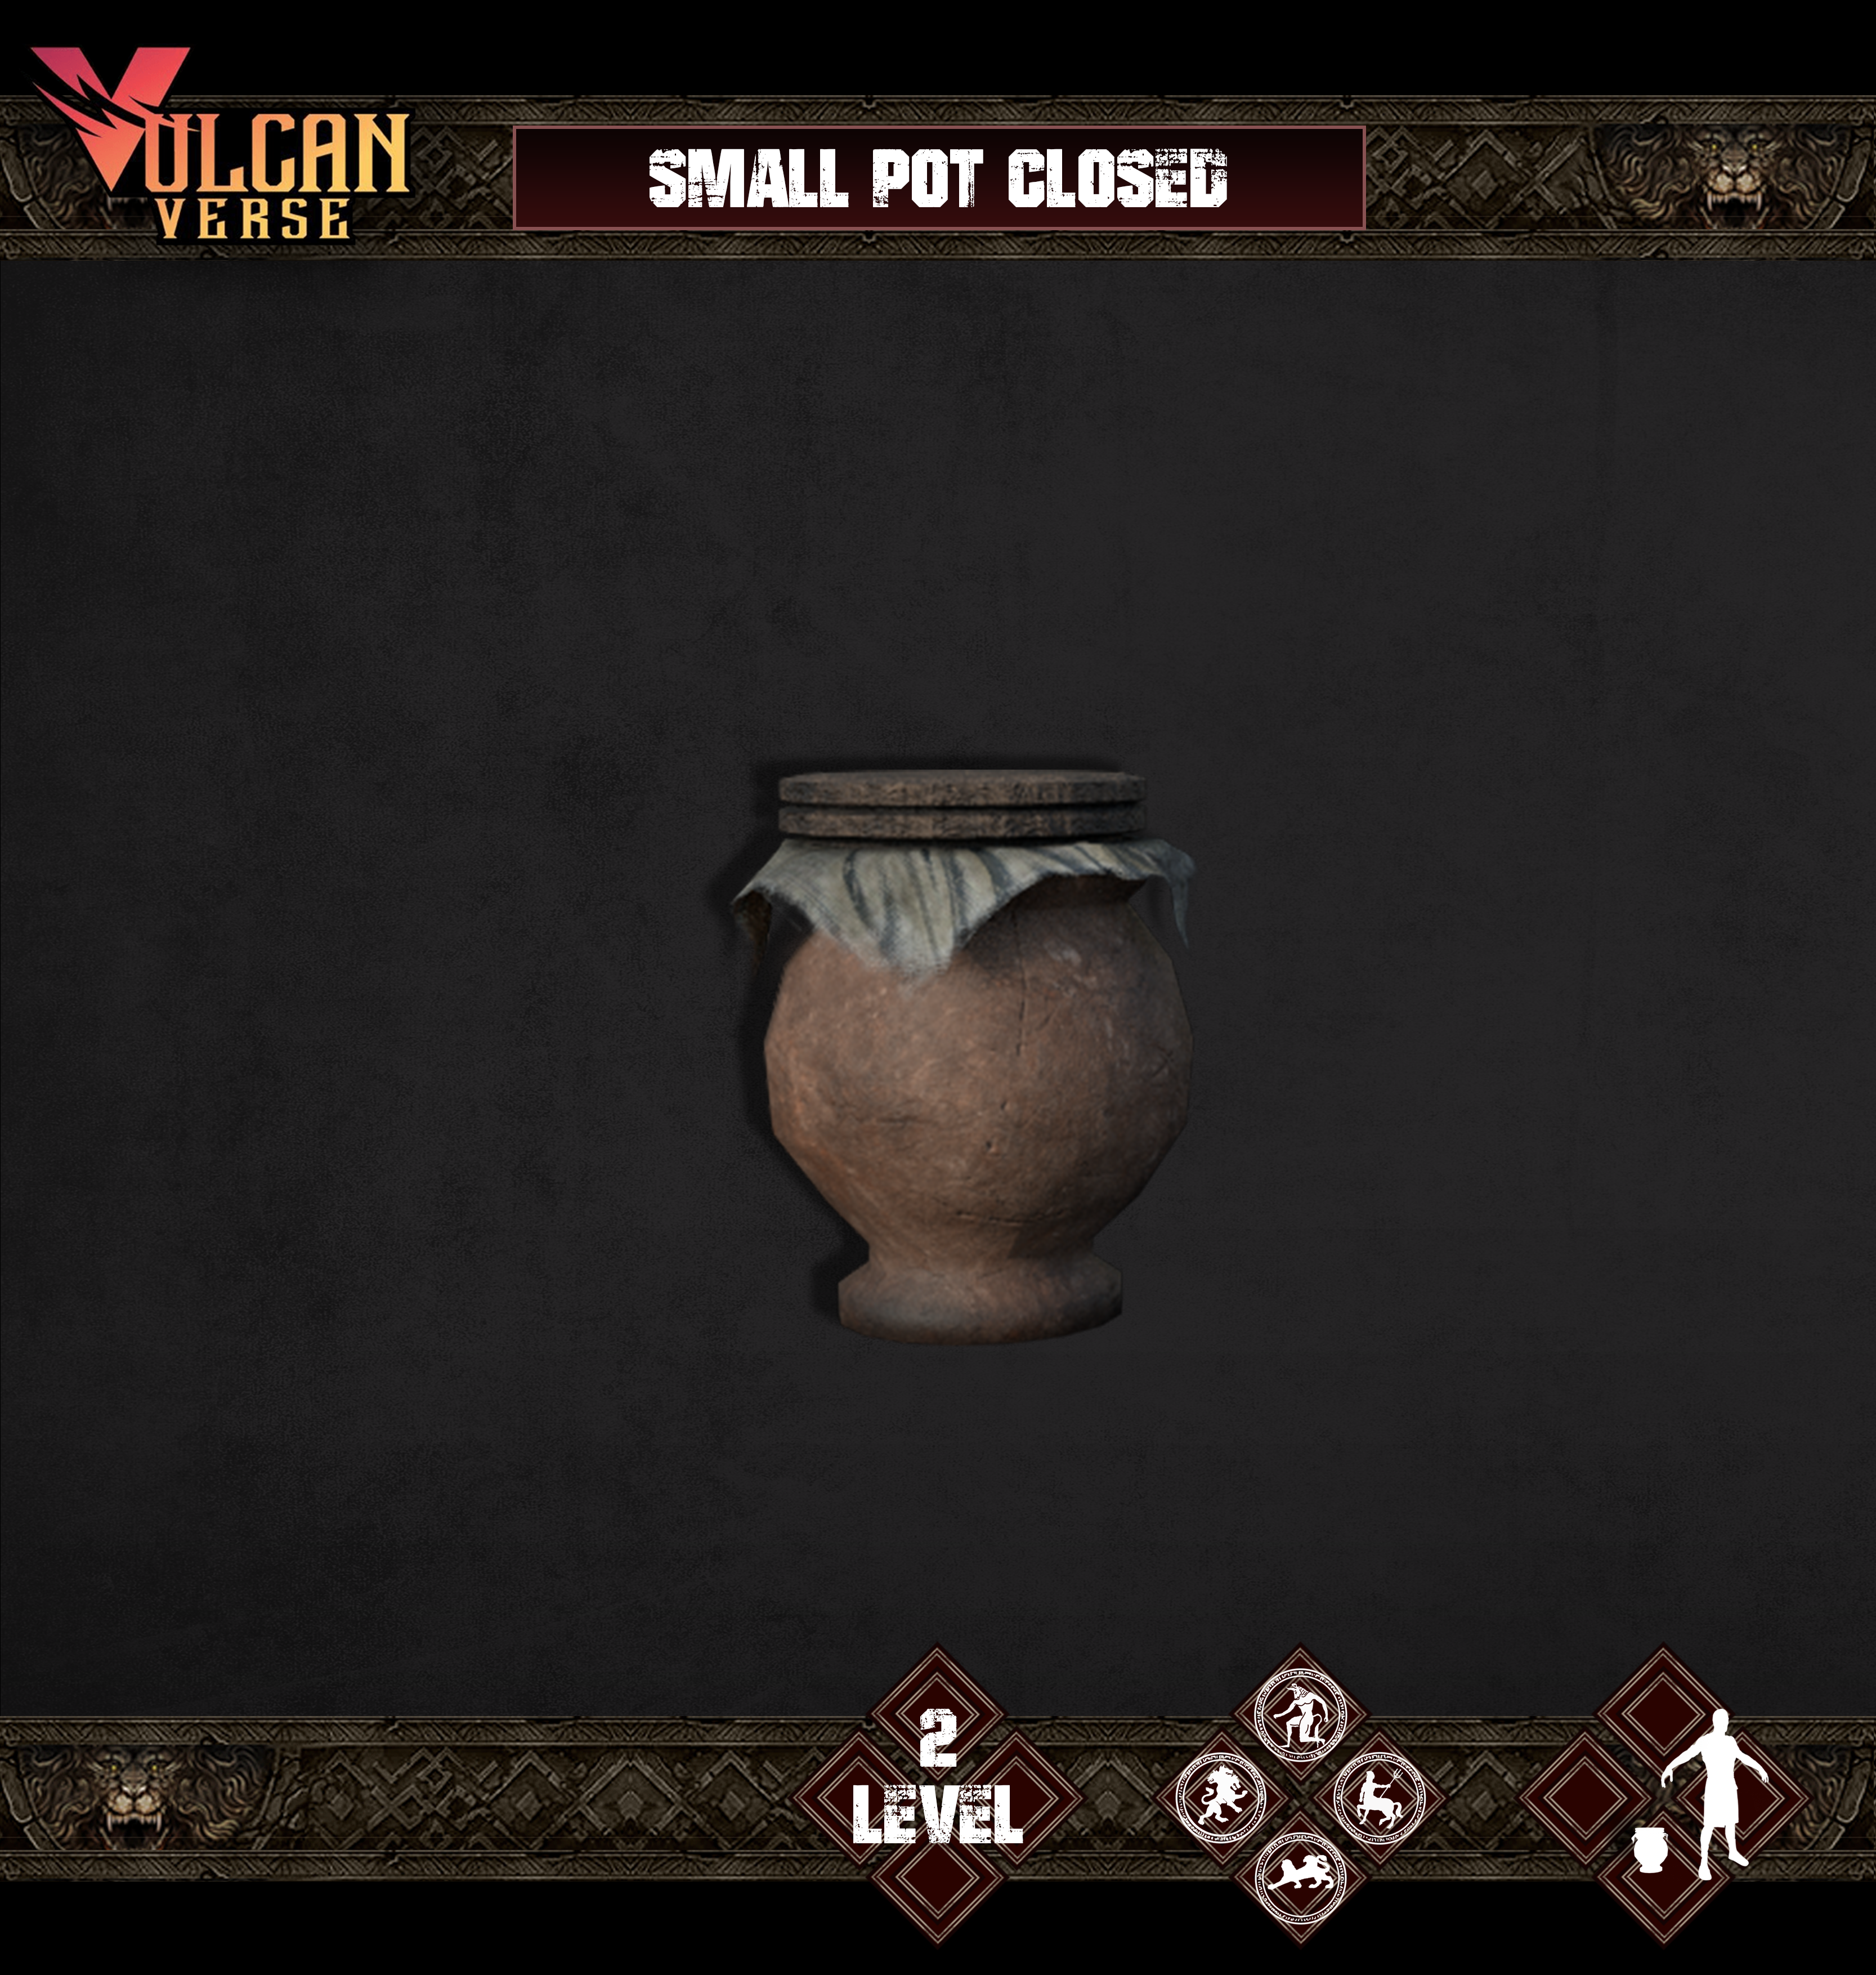 Small Pot closed